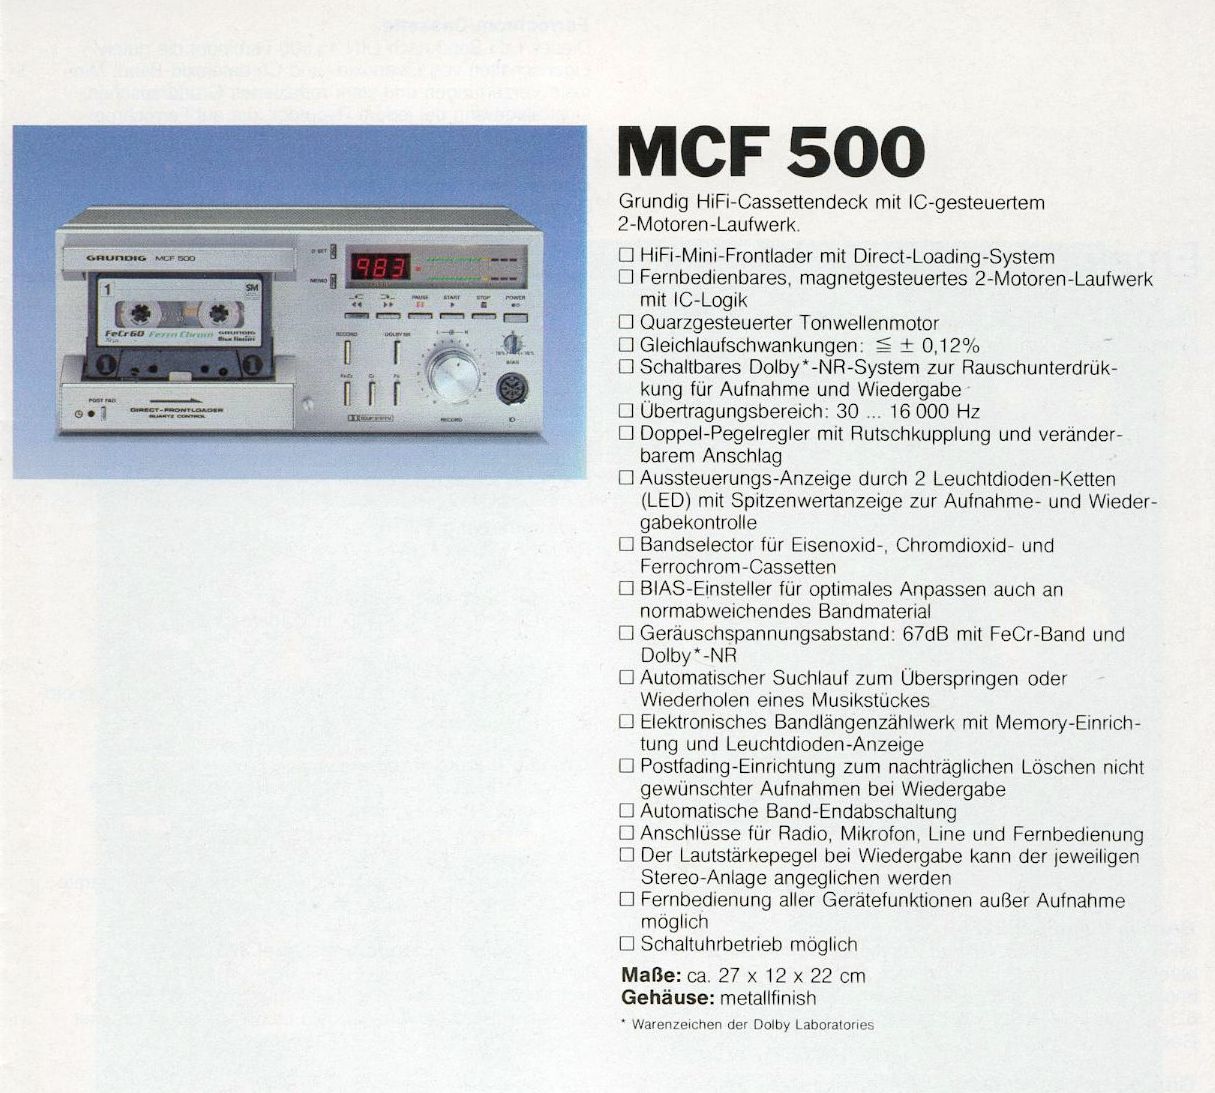 Grundig MCF-500 Mini-Prospekt-1.jpg